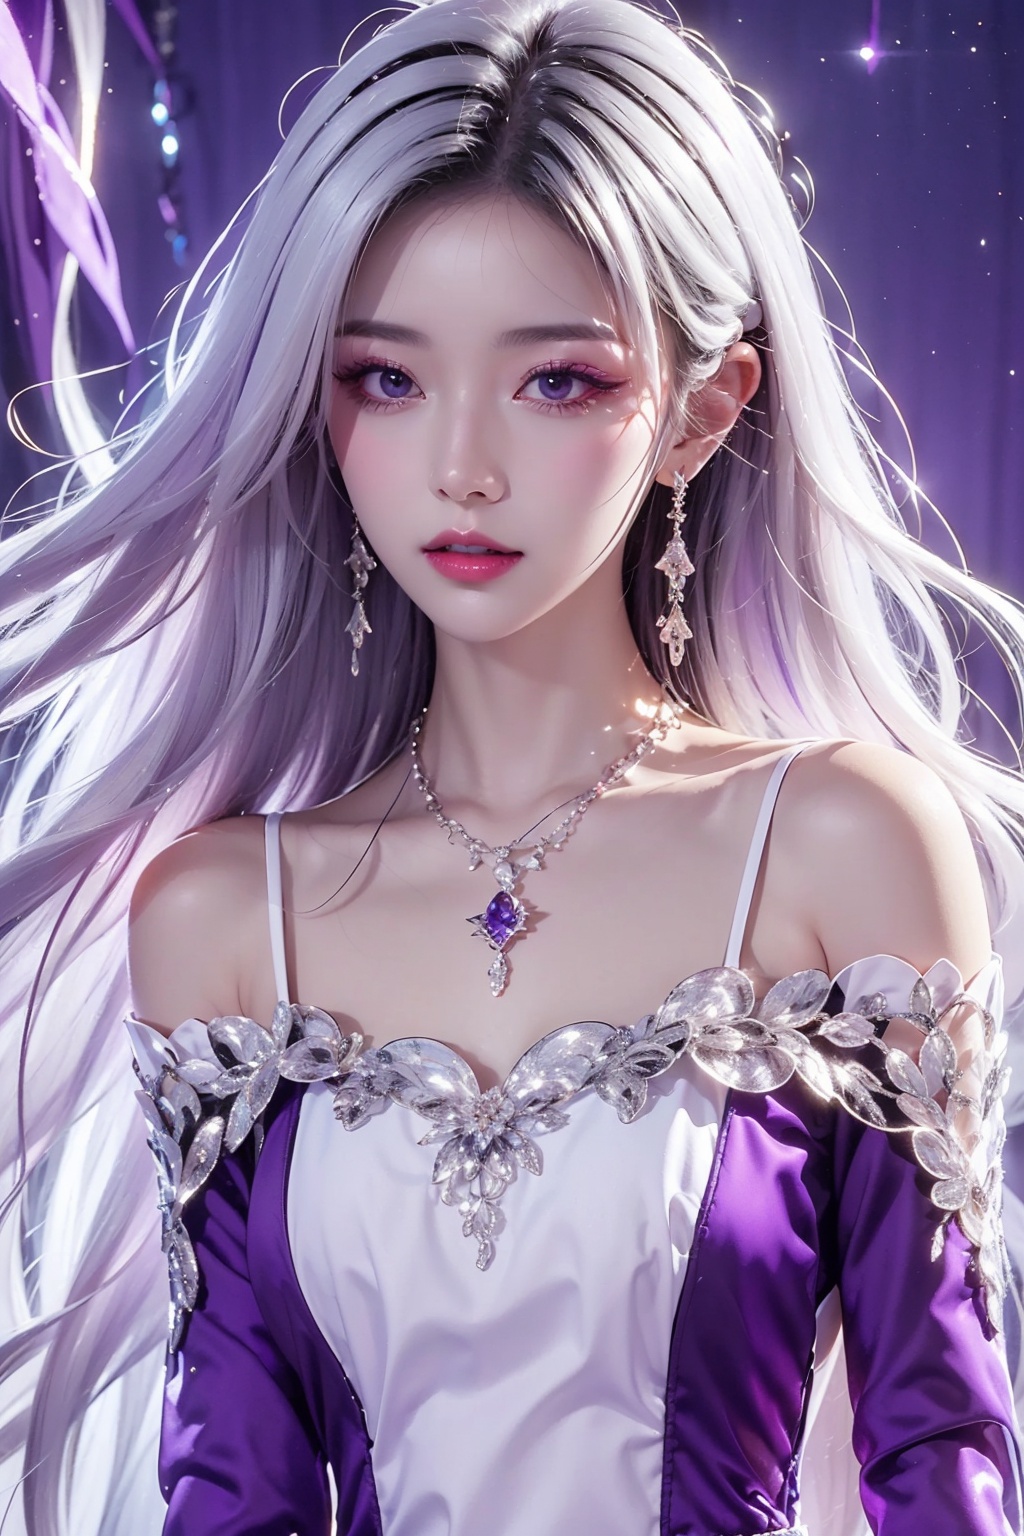 1 girl, white hair, purple power, purple white dress, jewelry,night,starry background